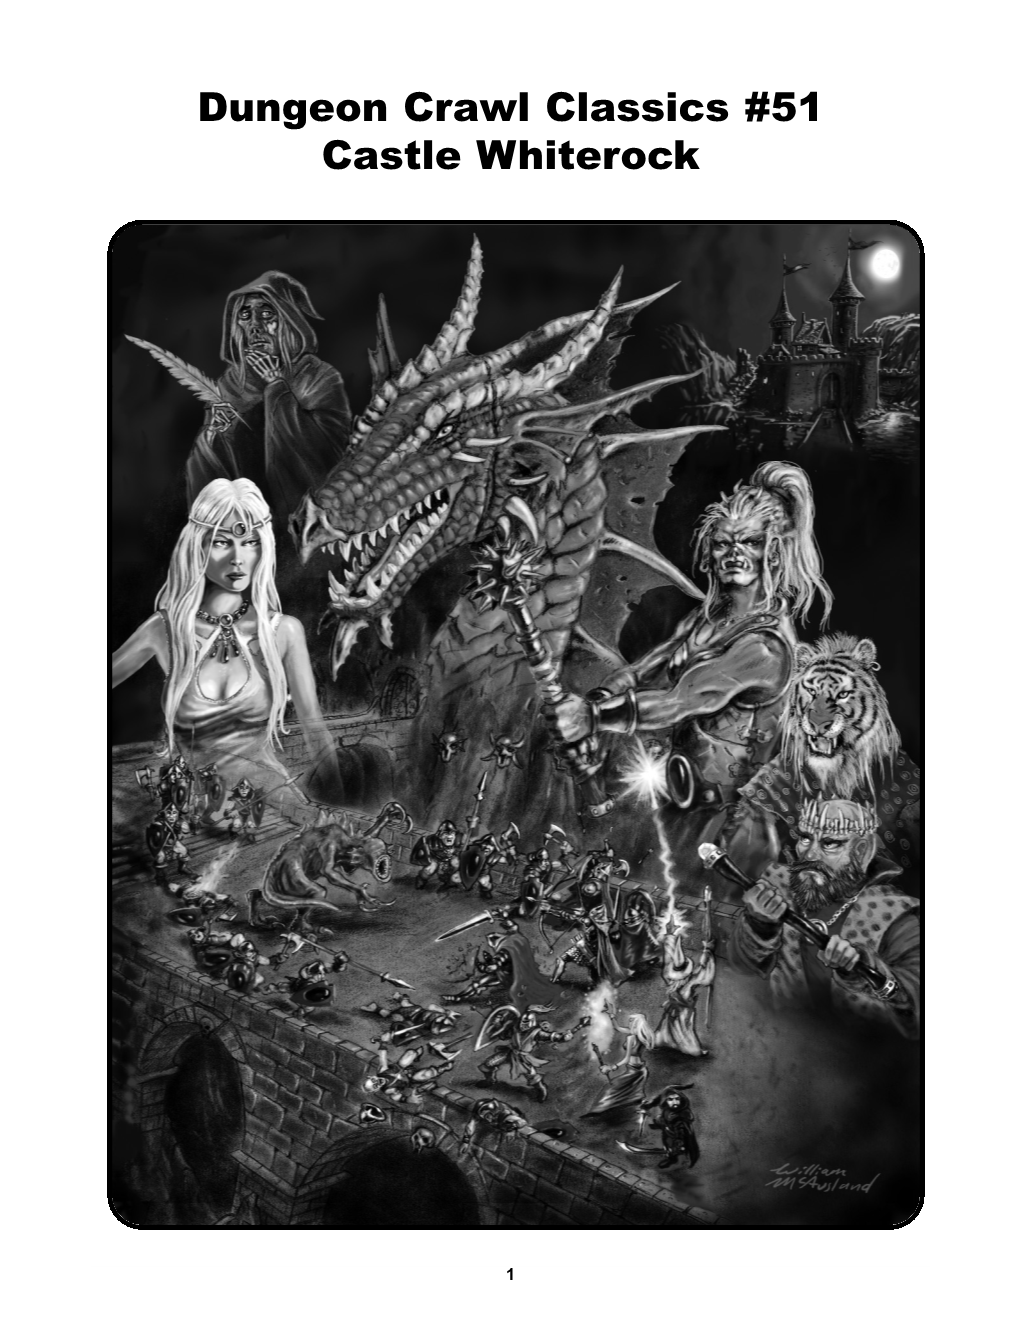 Dungeon Crawl Classics #51: Castle Whiterock